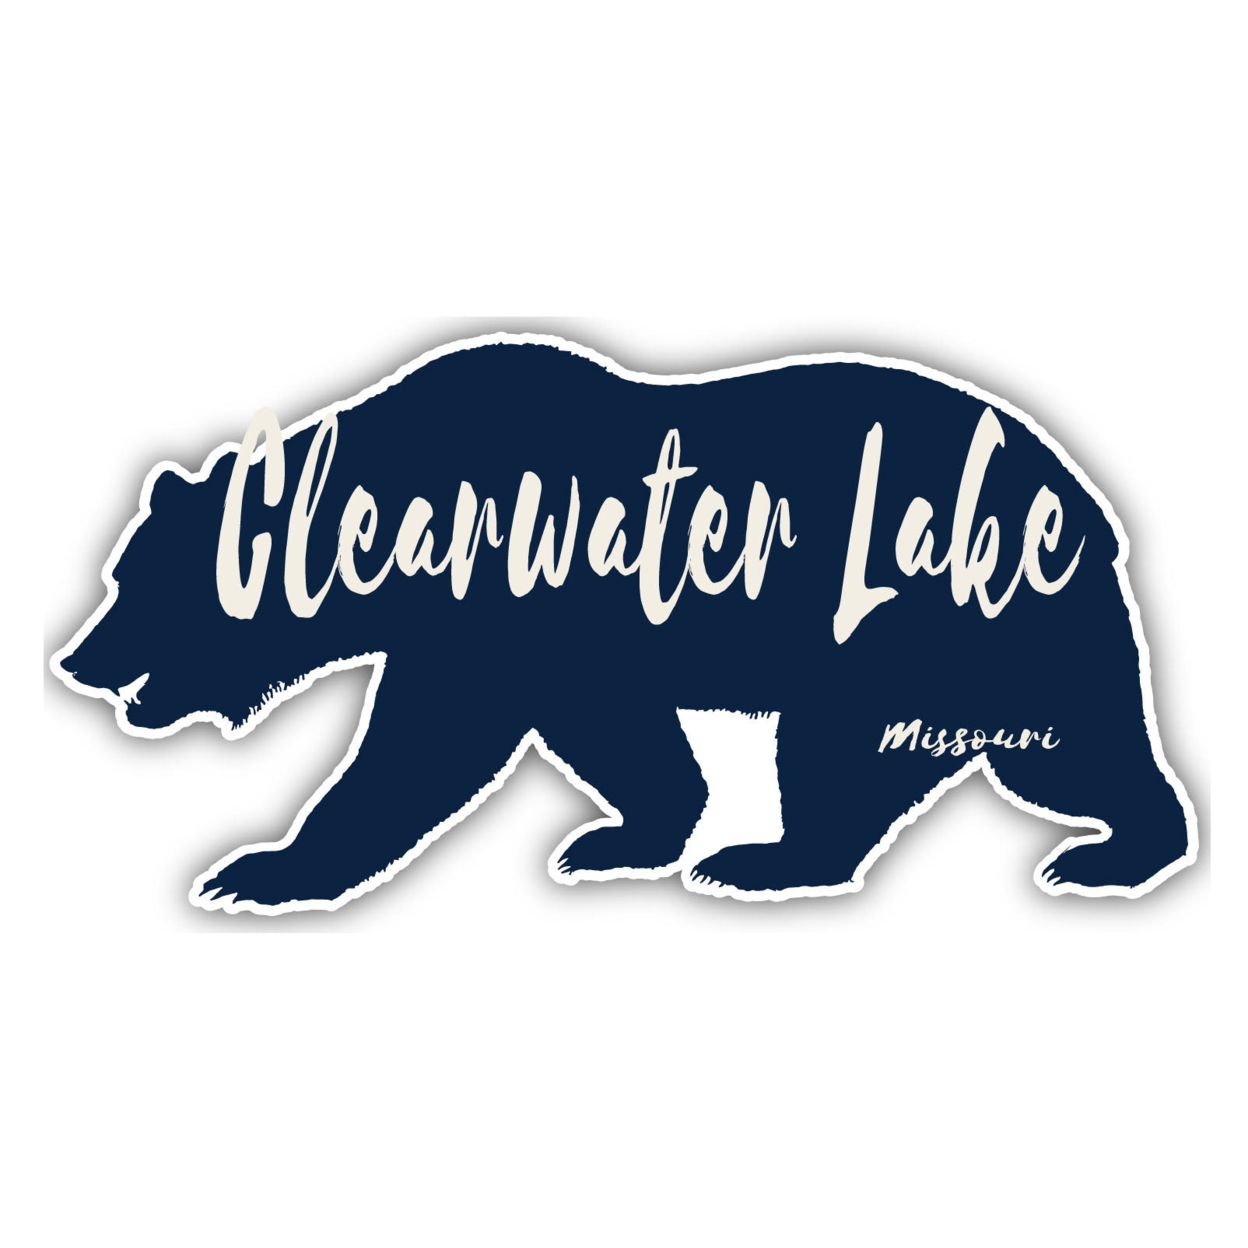 Clearwater Lake Missouri Souvenir Decorative Stickers (Choose Theme And Size) - Single Unit, 10-Inch, Bear